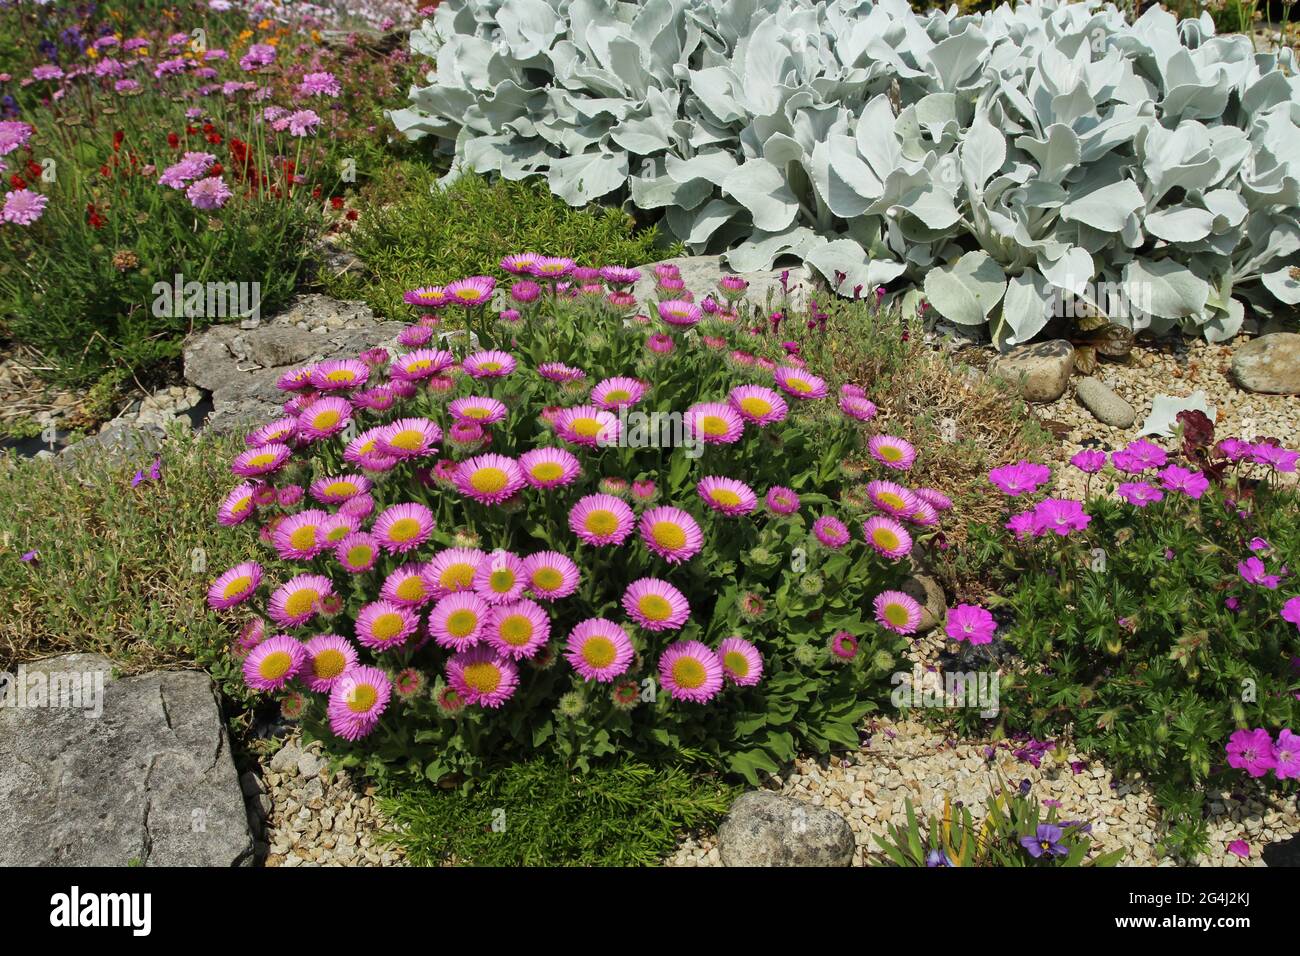 Garden rockery featuring Erigeron glaucus 'Seaside Daisy' flowers and Senecio 'Angel Wing' plant in blossom Stock Photo